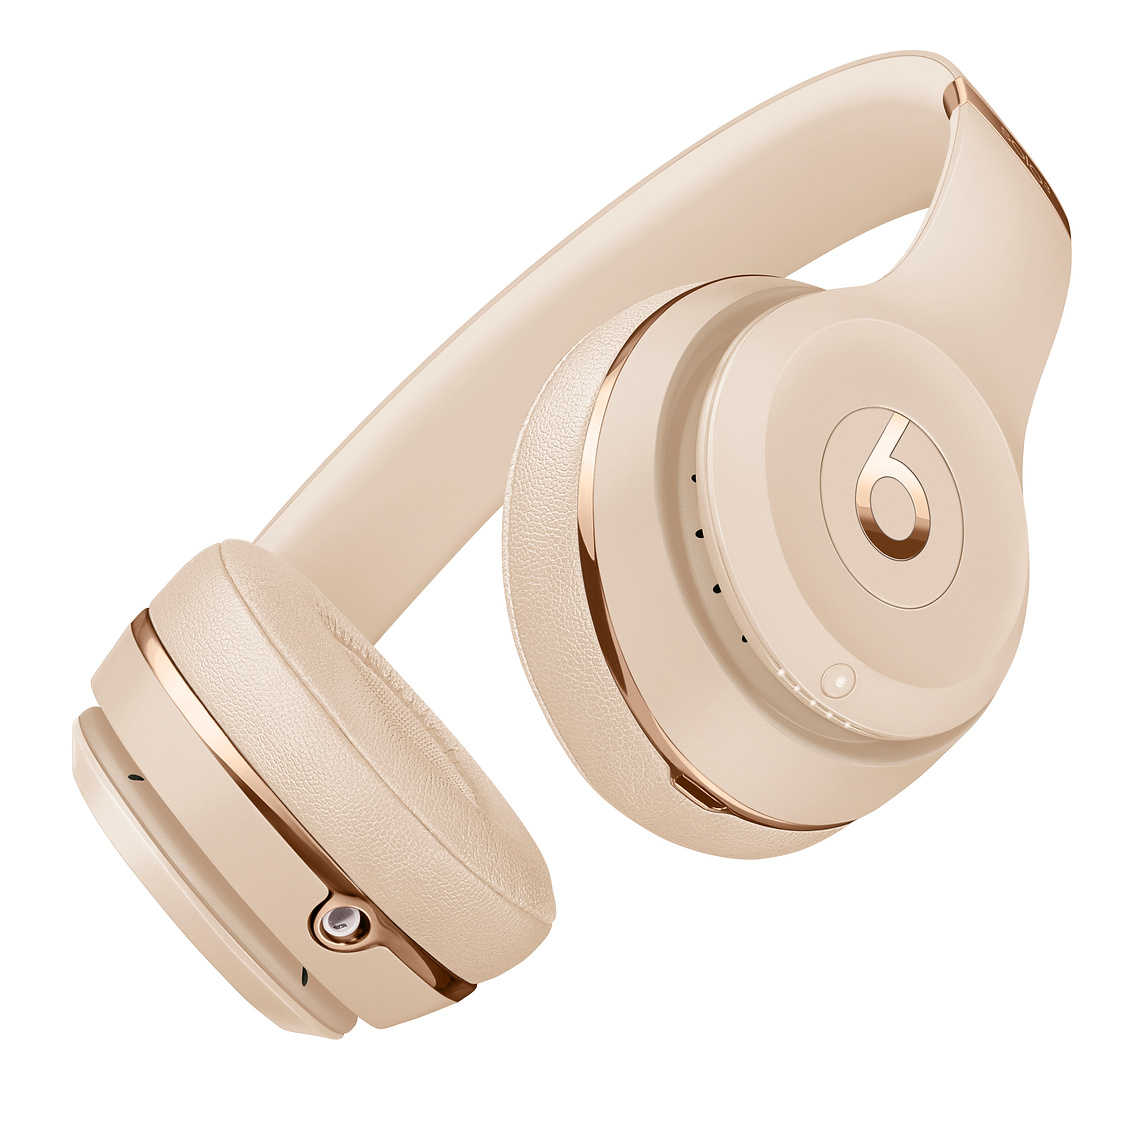 【Beats】Solo3 Wireless 緞金色 藍牙無線耳罩式耳機 ★免運★